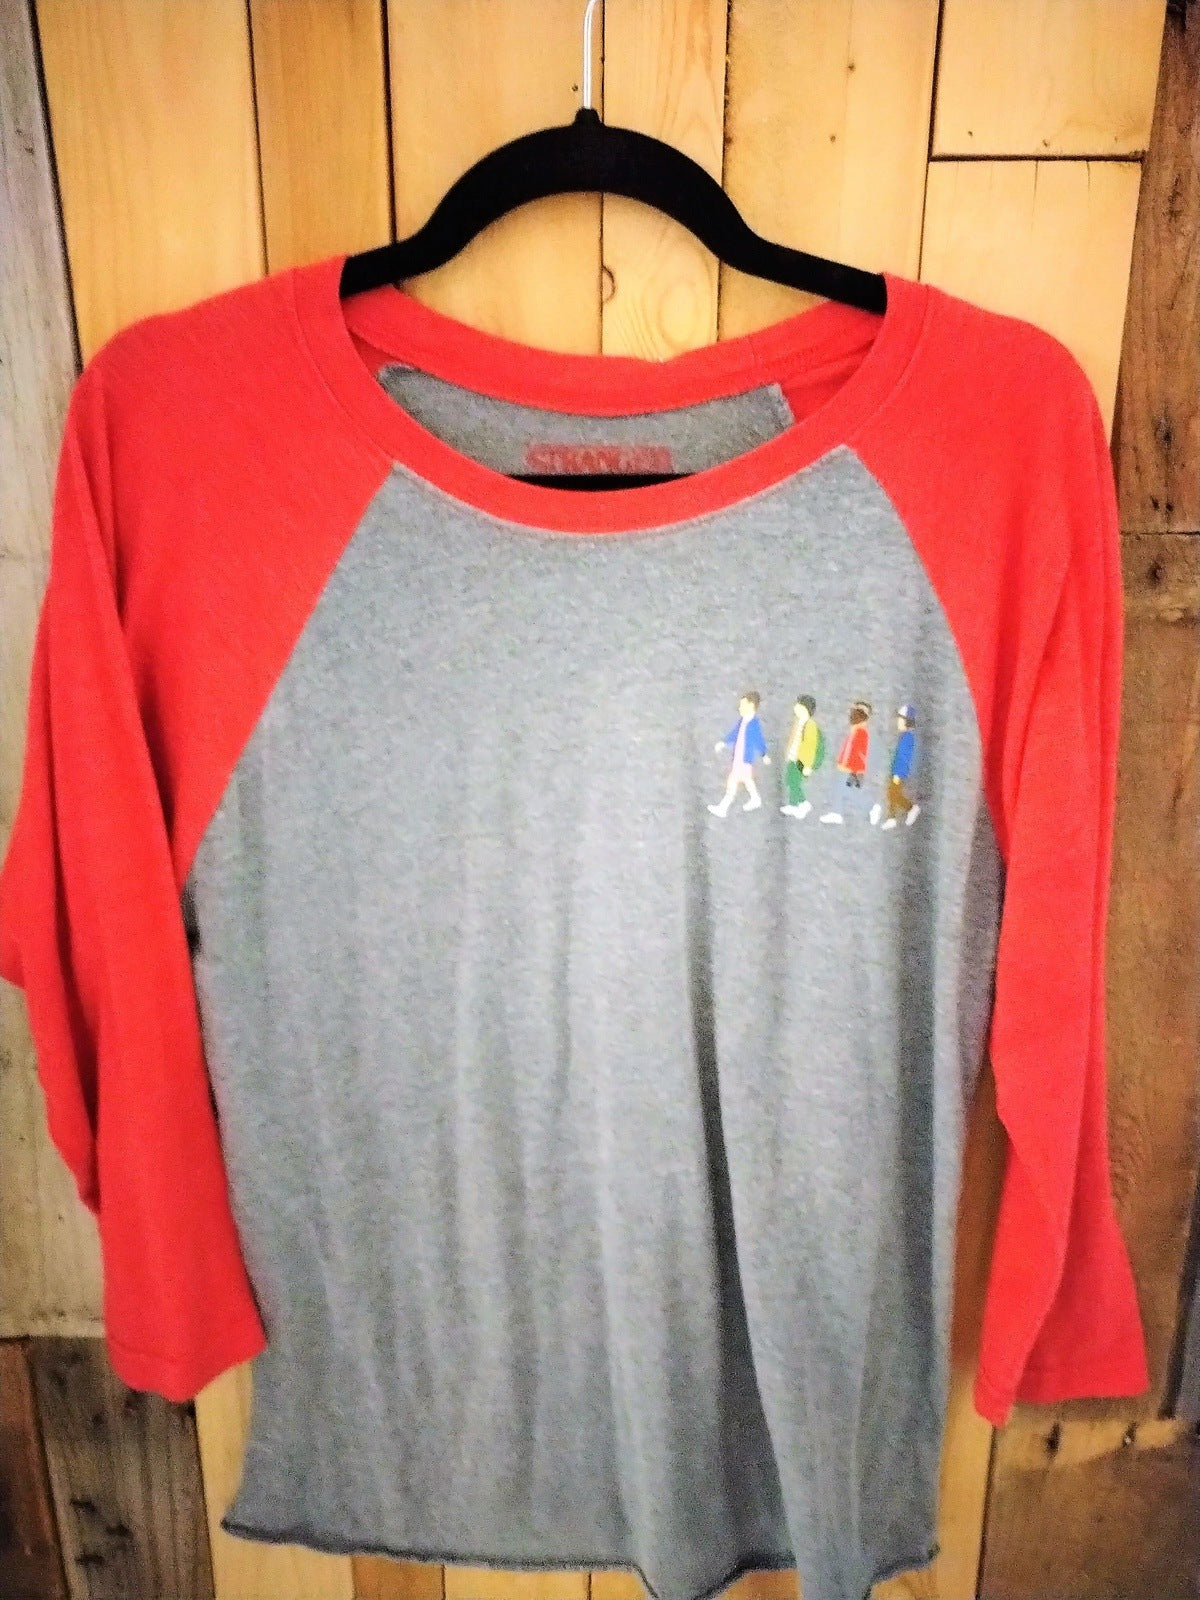 Stranger Things Official Merchandise "Abby Road" Baseball Tee Shirt Size Medium